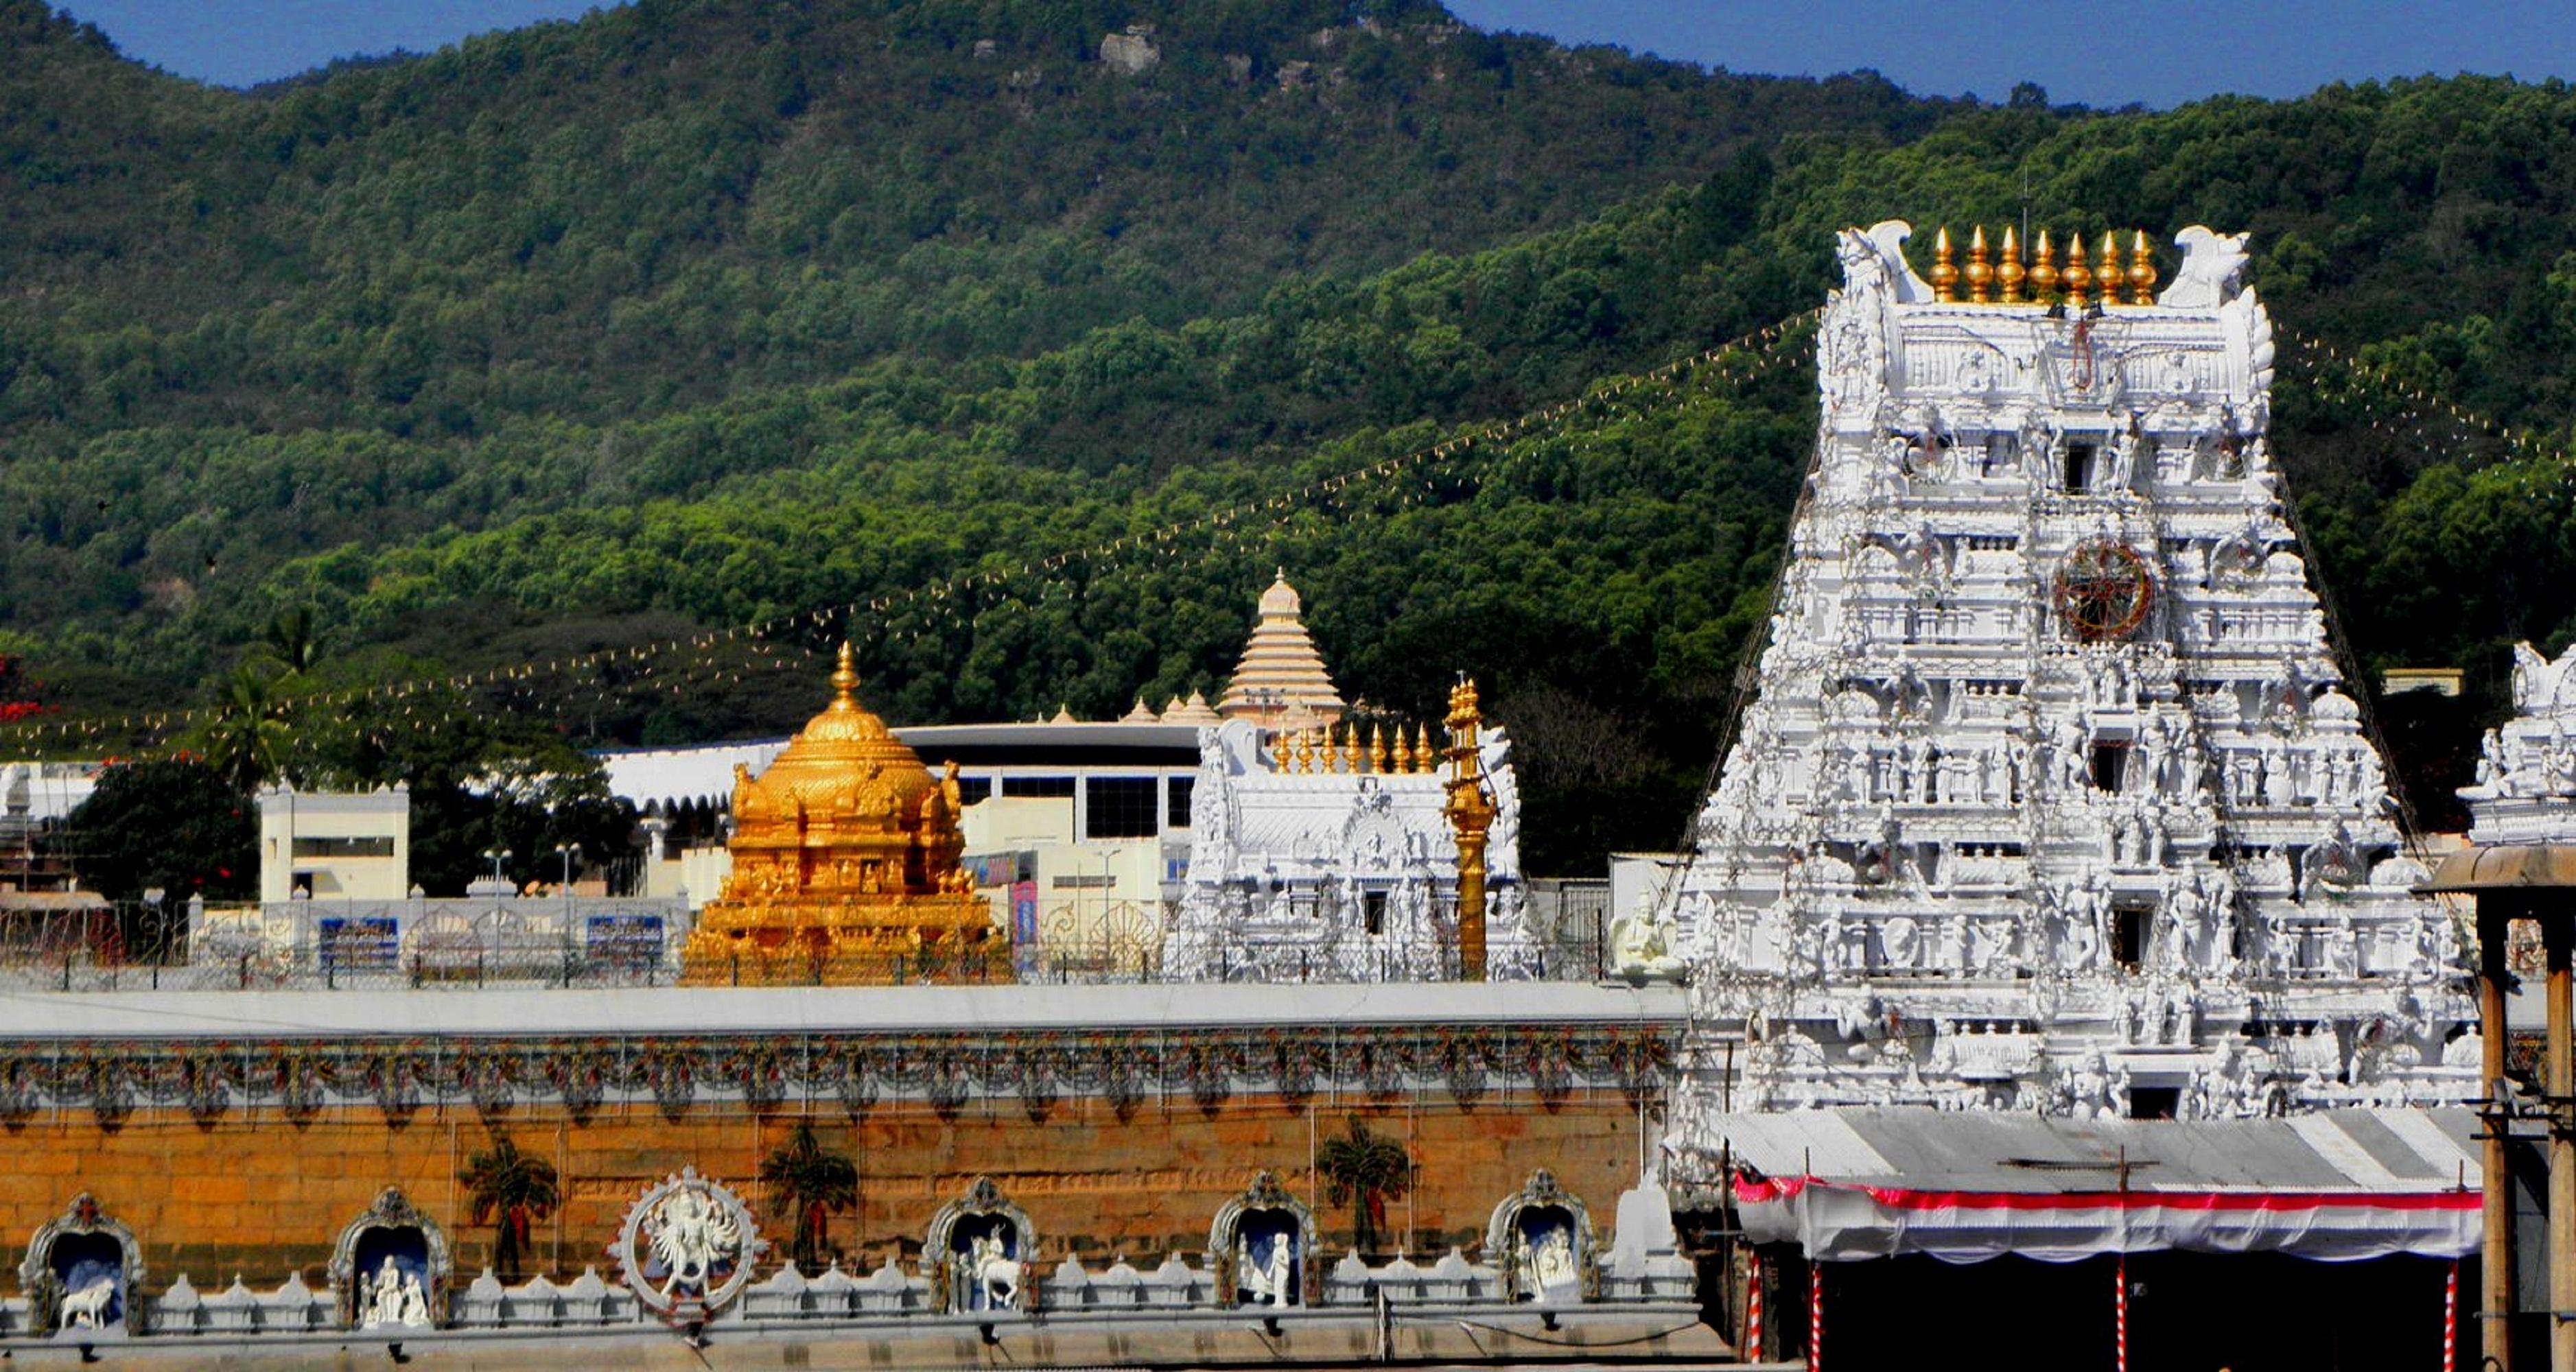 The Tirumala temple at Tirupati